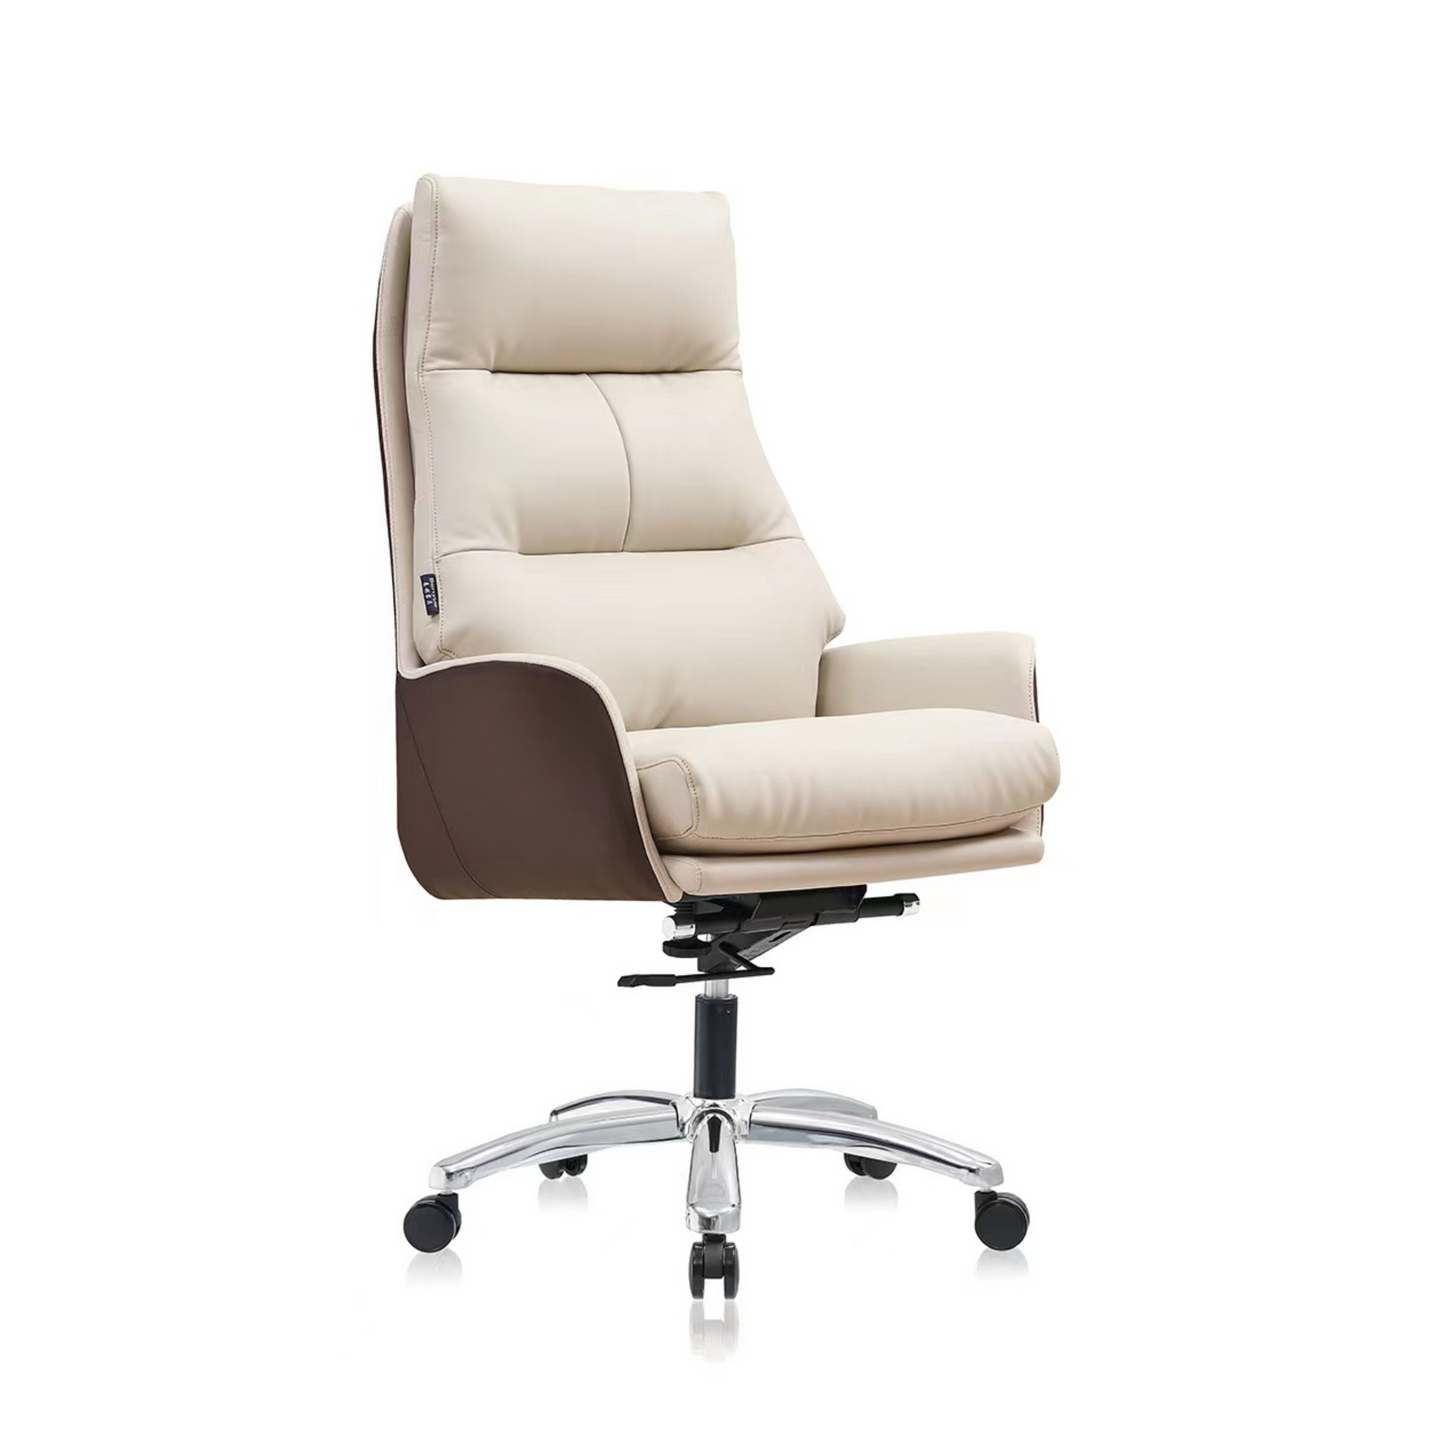 H8206 Imitation Leather High Back Executive Chair